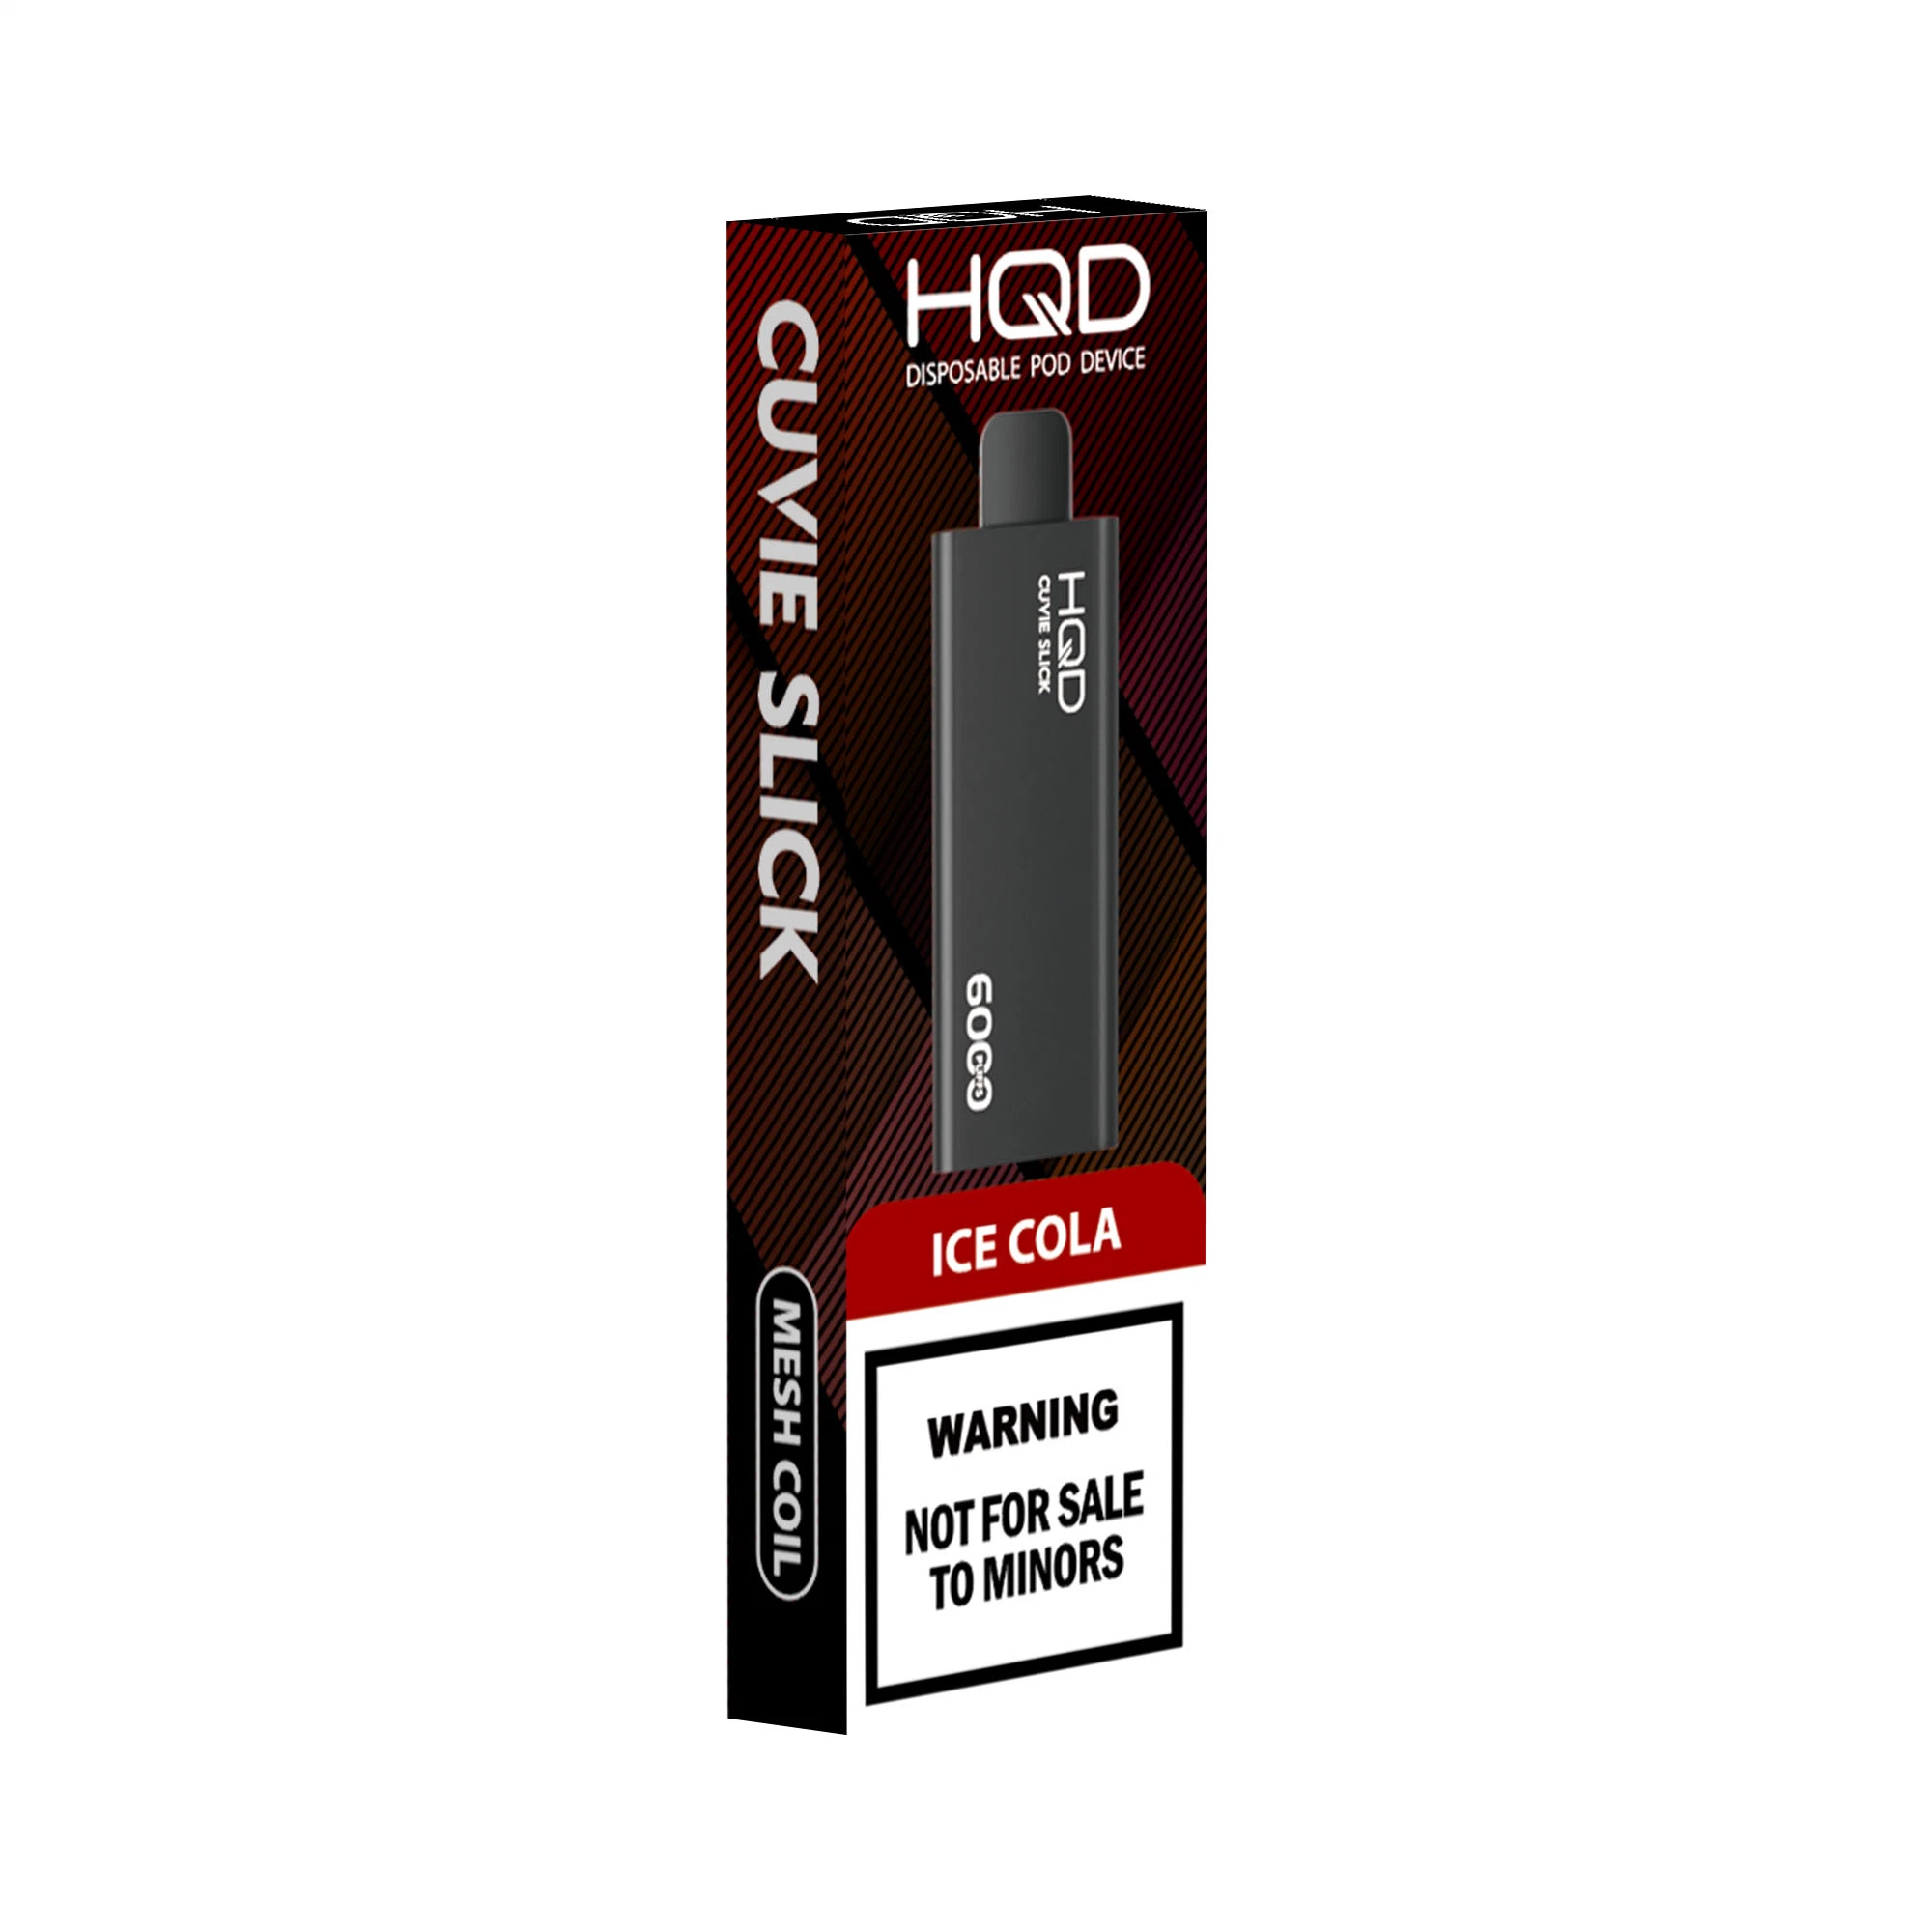 Original Hqd Cuvie Slick 1400mAh Battery with 1.0ohm Mesh Coil